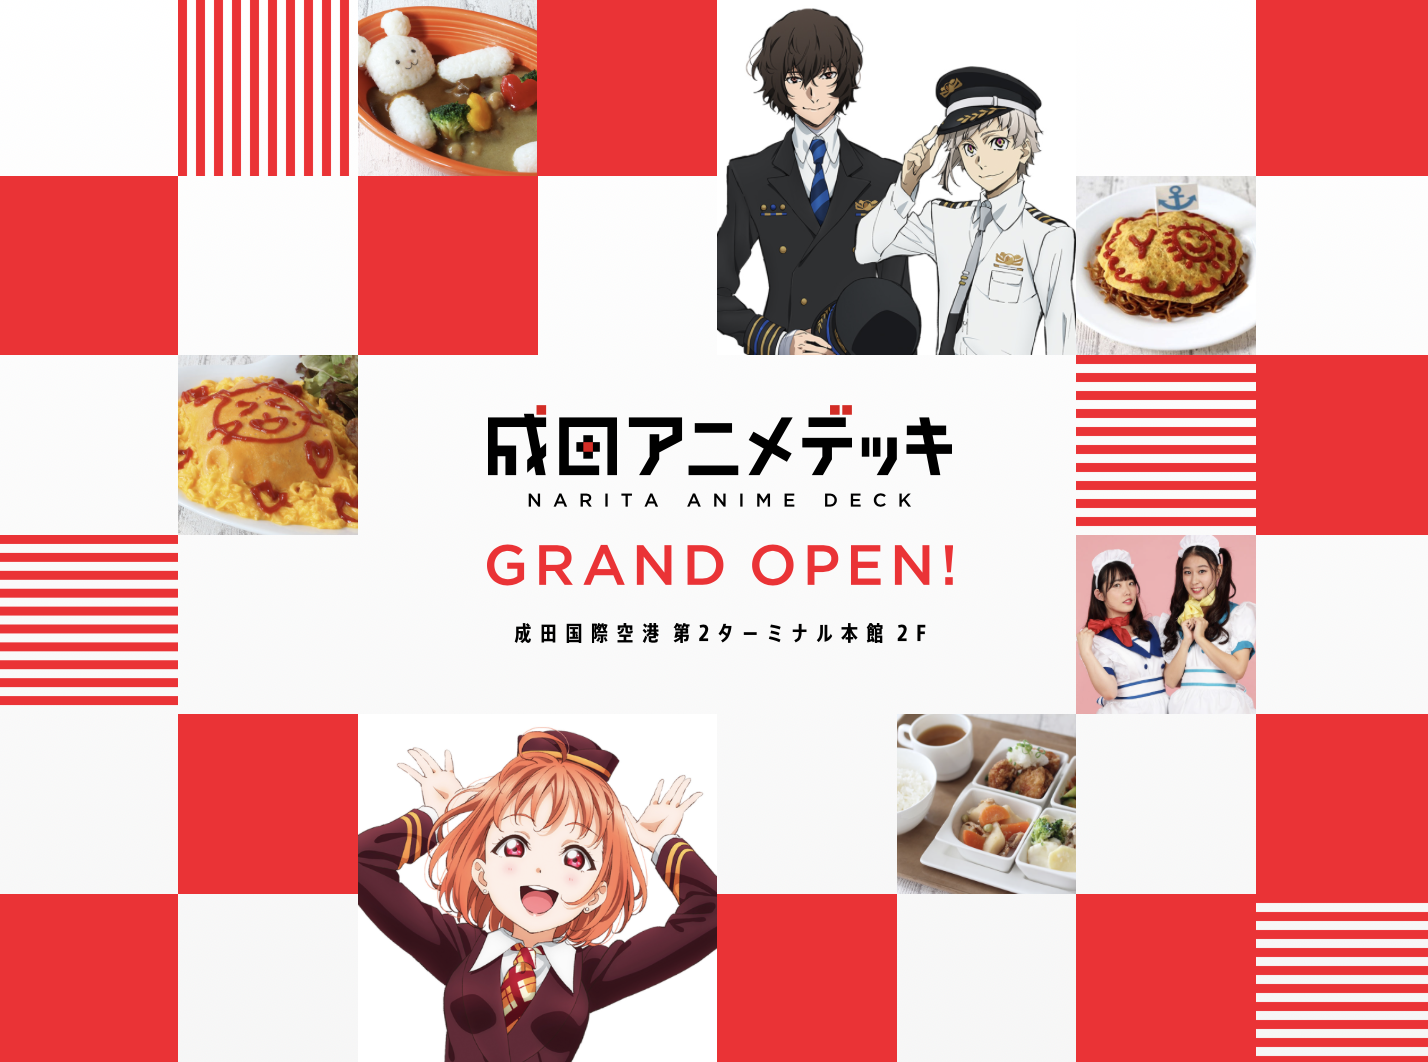 Anime-themed Experiential Entertainment Facility ” NARITA ANIME DECK ” Opens!